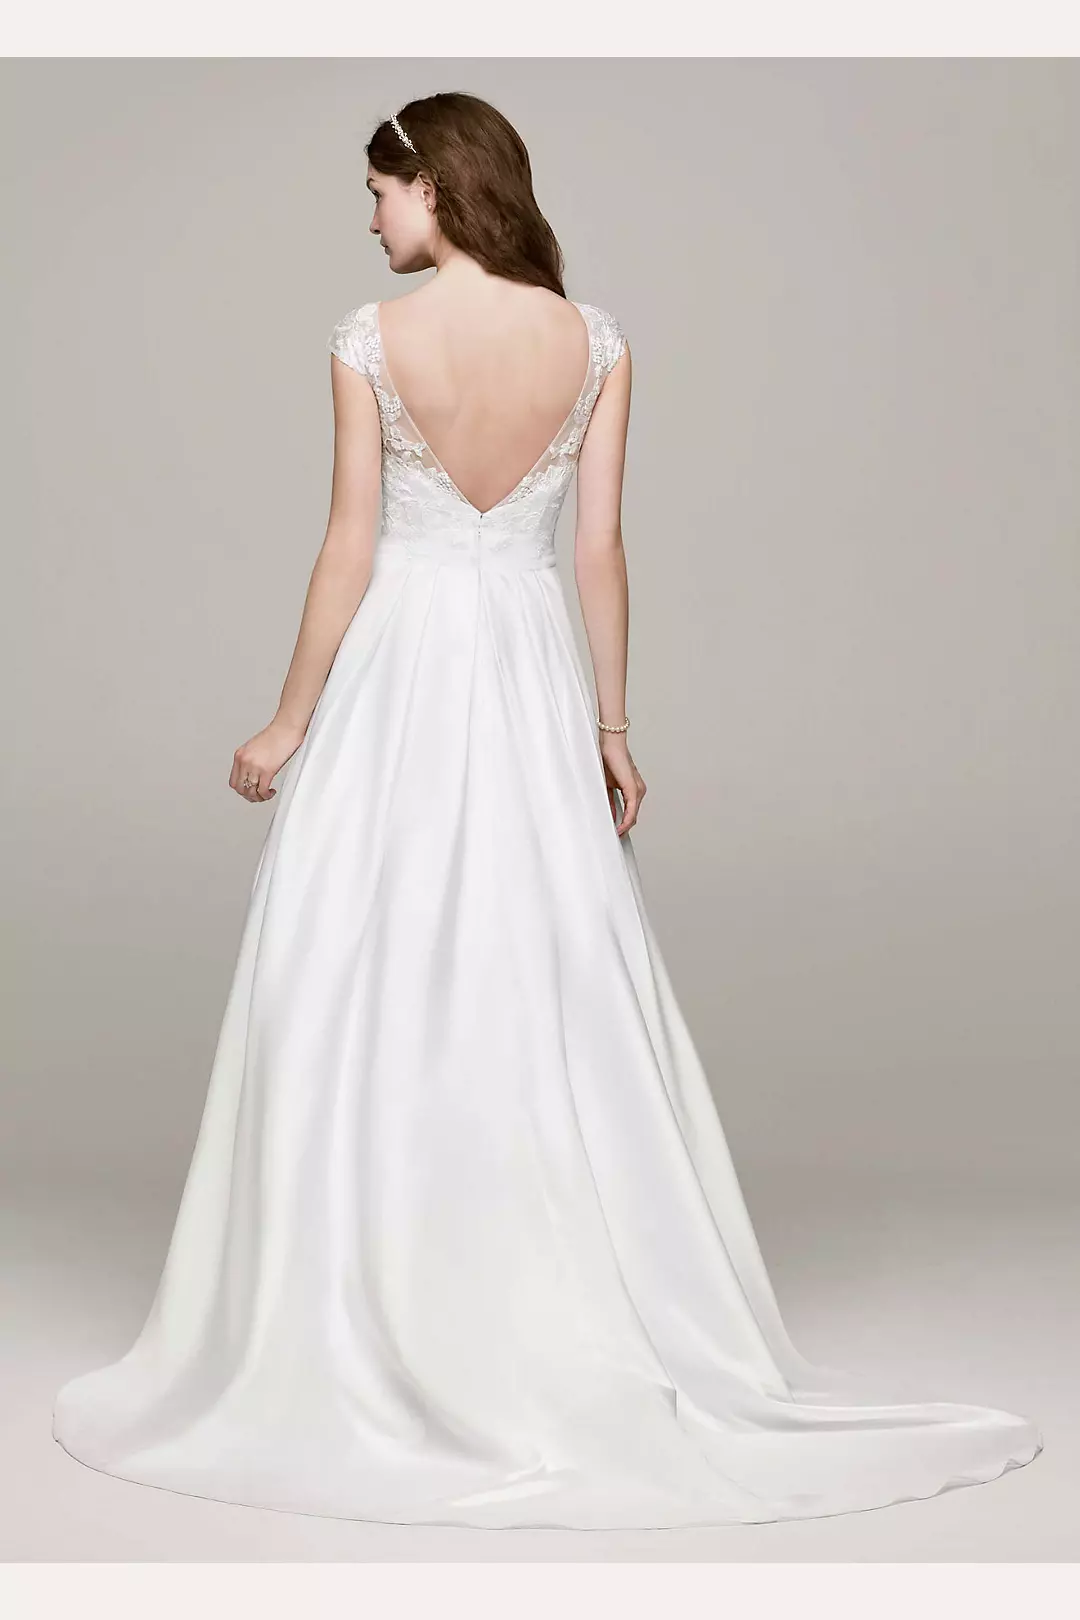 Cap Sleeve Wedding Dress with Illusion Neckline  Image 2